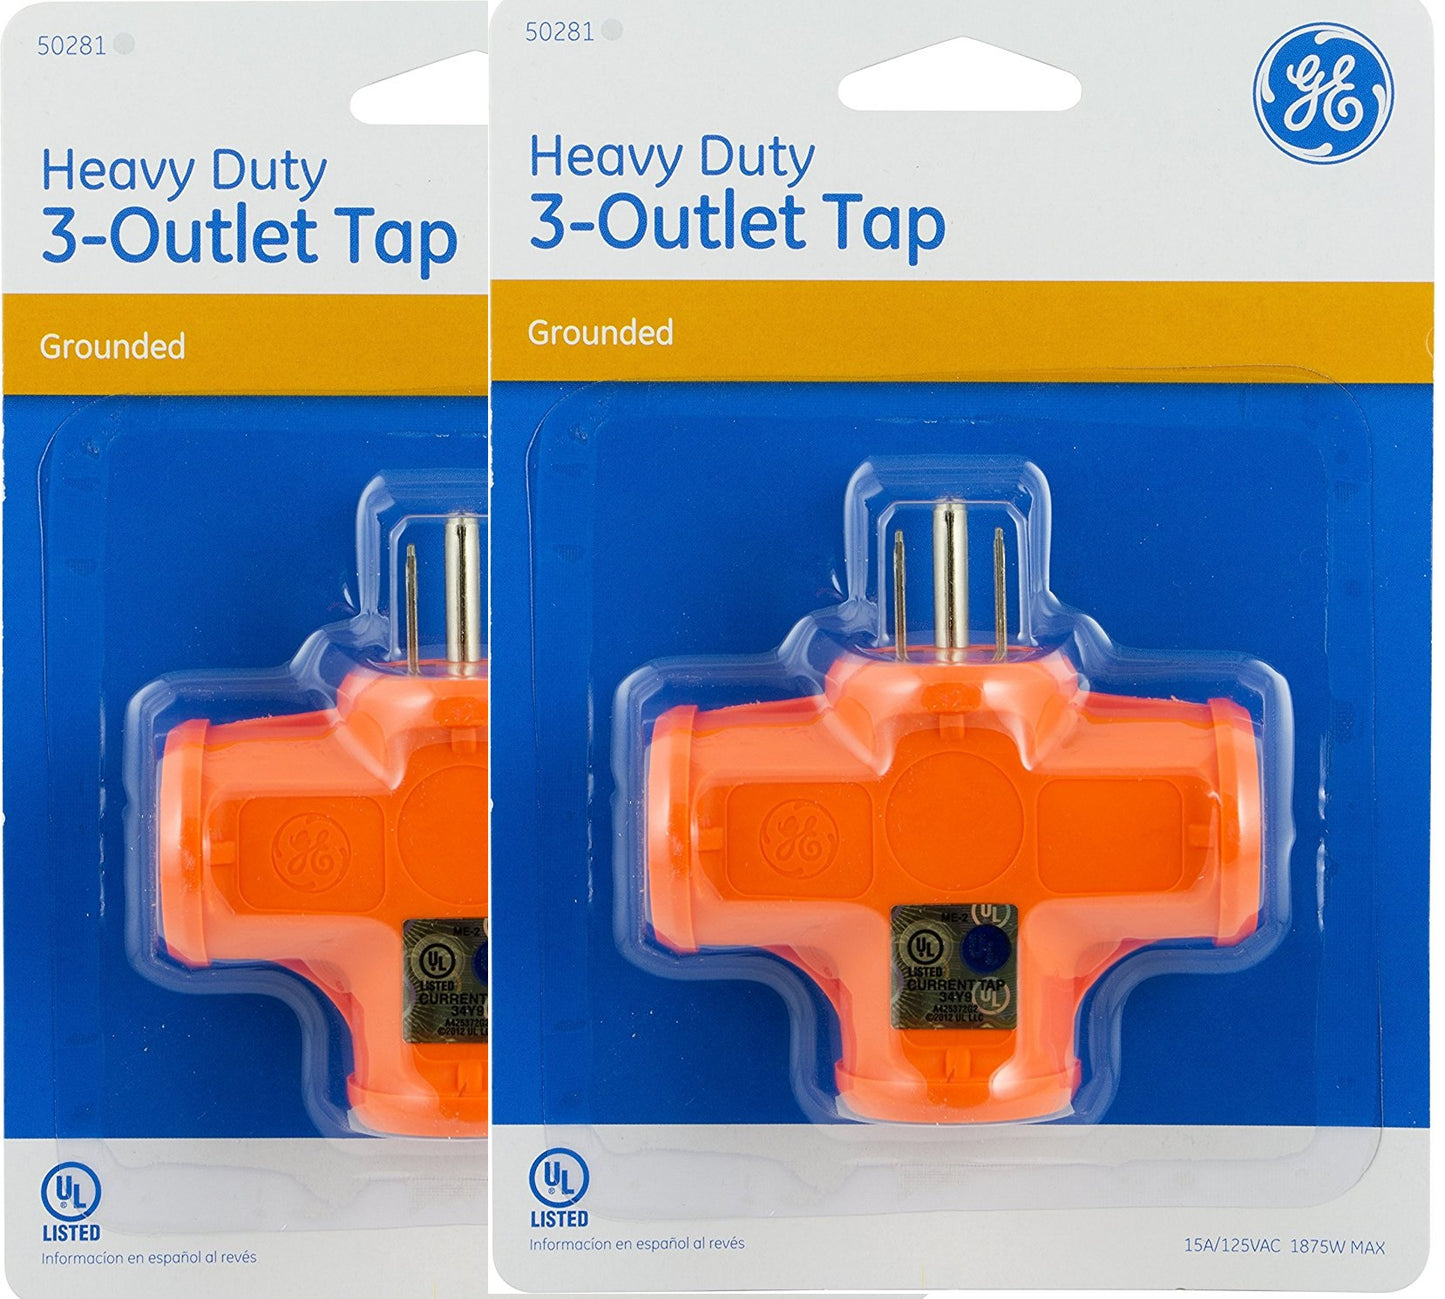 GE Heavy Duty 3-Outlet Tap, 50281